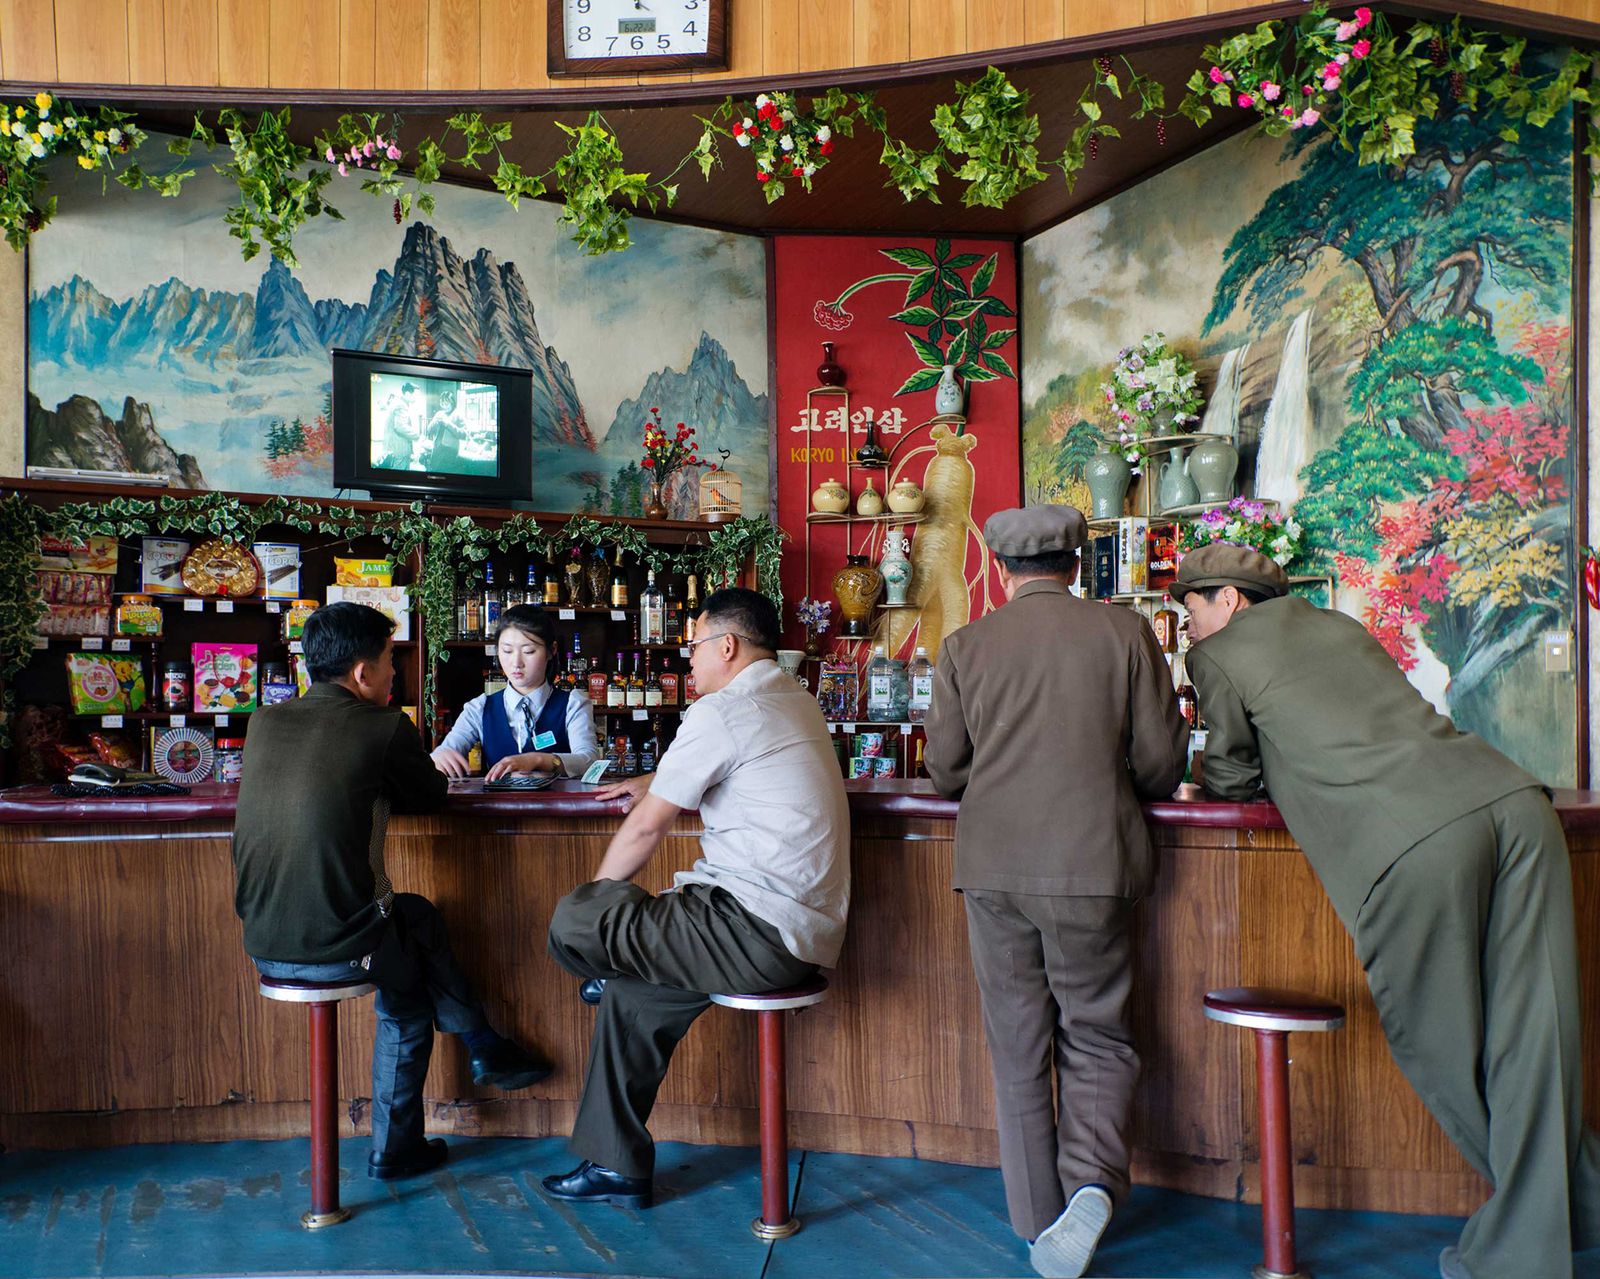 © Lee Grant - The Seaman's Club in Chongjin, North Korea, 2014